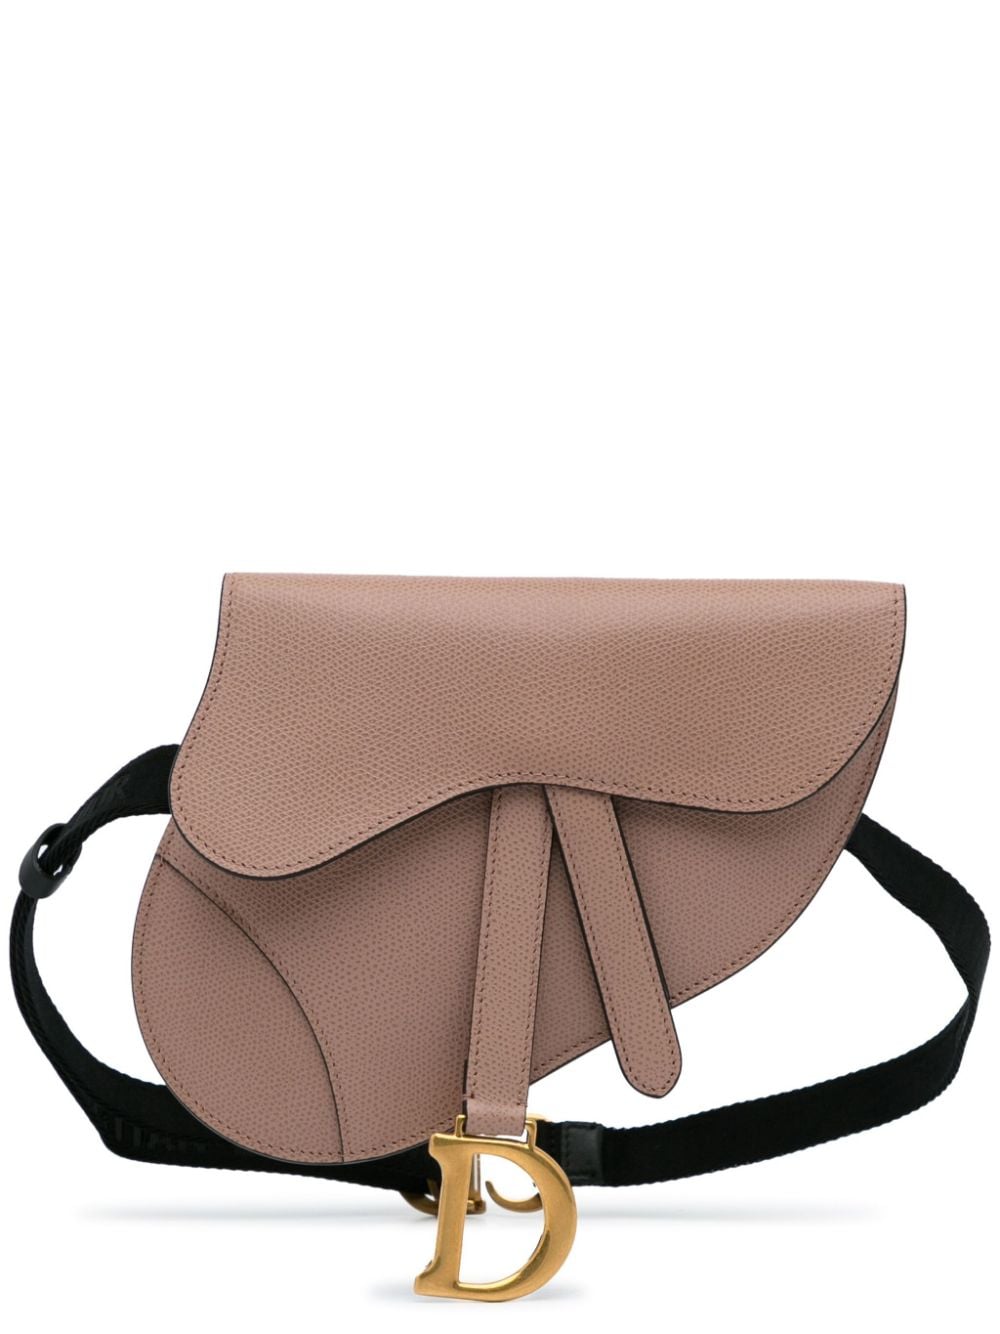 Pre-owned Dior 2019 Saddle Belt Bag In Brown